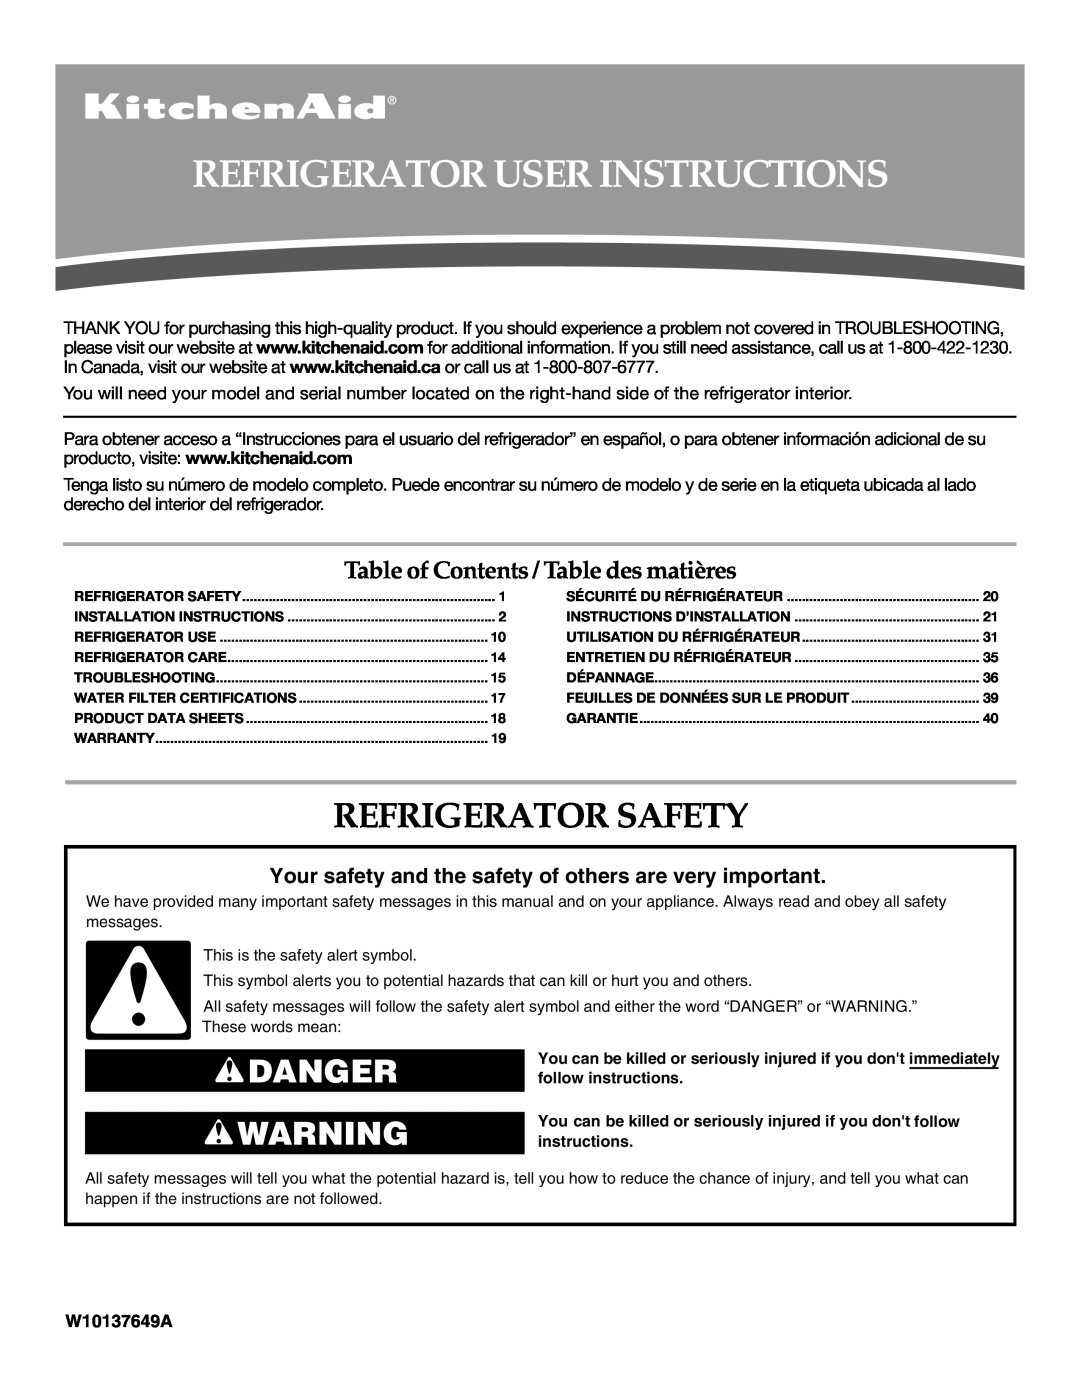 KitchenAid W10137649A installation instructions Refrigerator User Instructions, Refrigerator Safety, Danger 